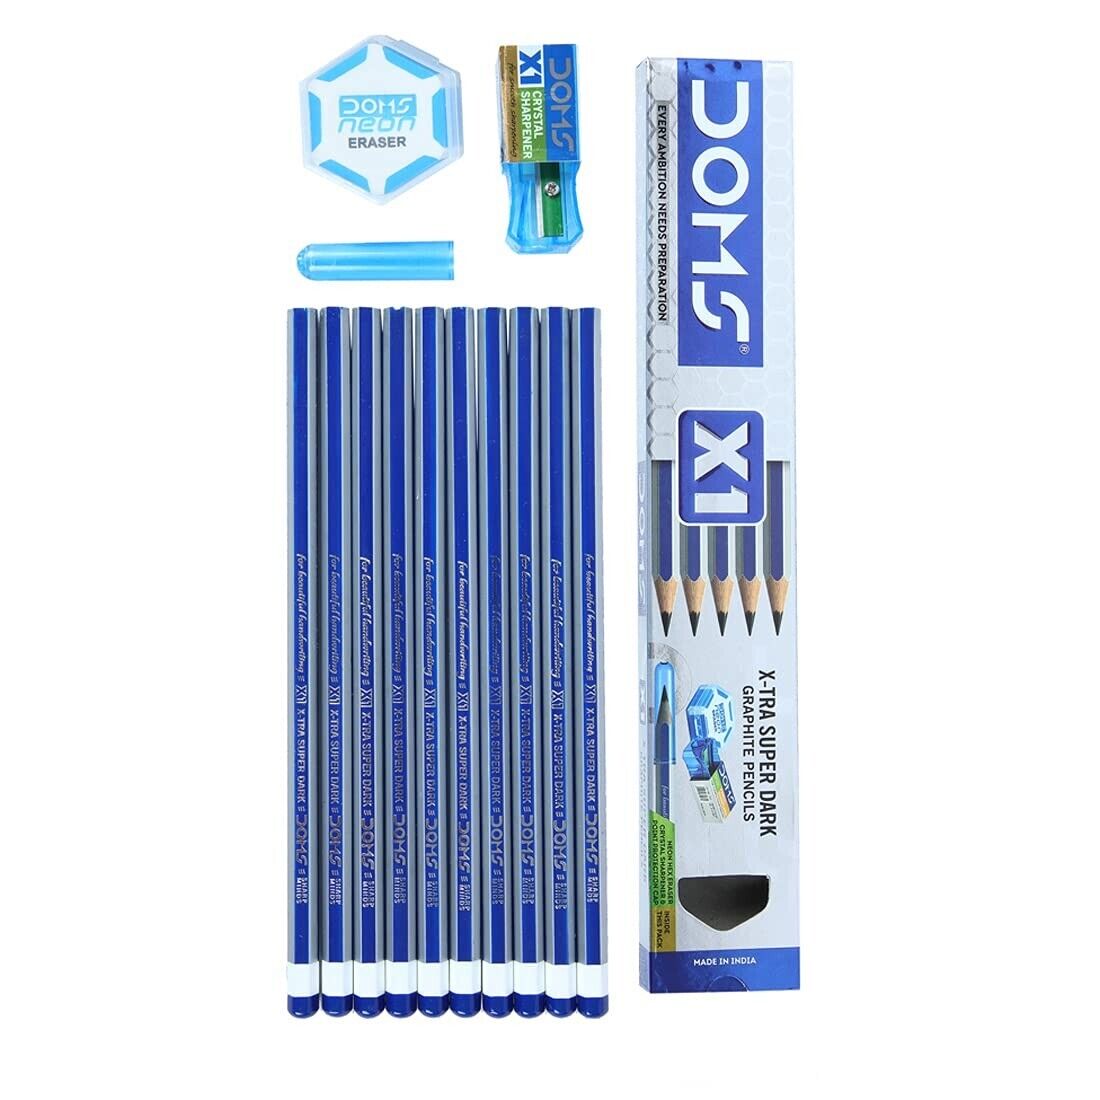 Doms X1 Xtra Super Dark 10 Pencils With Free Eraser, Scale & Pencil Cap Inside